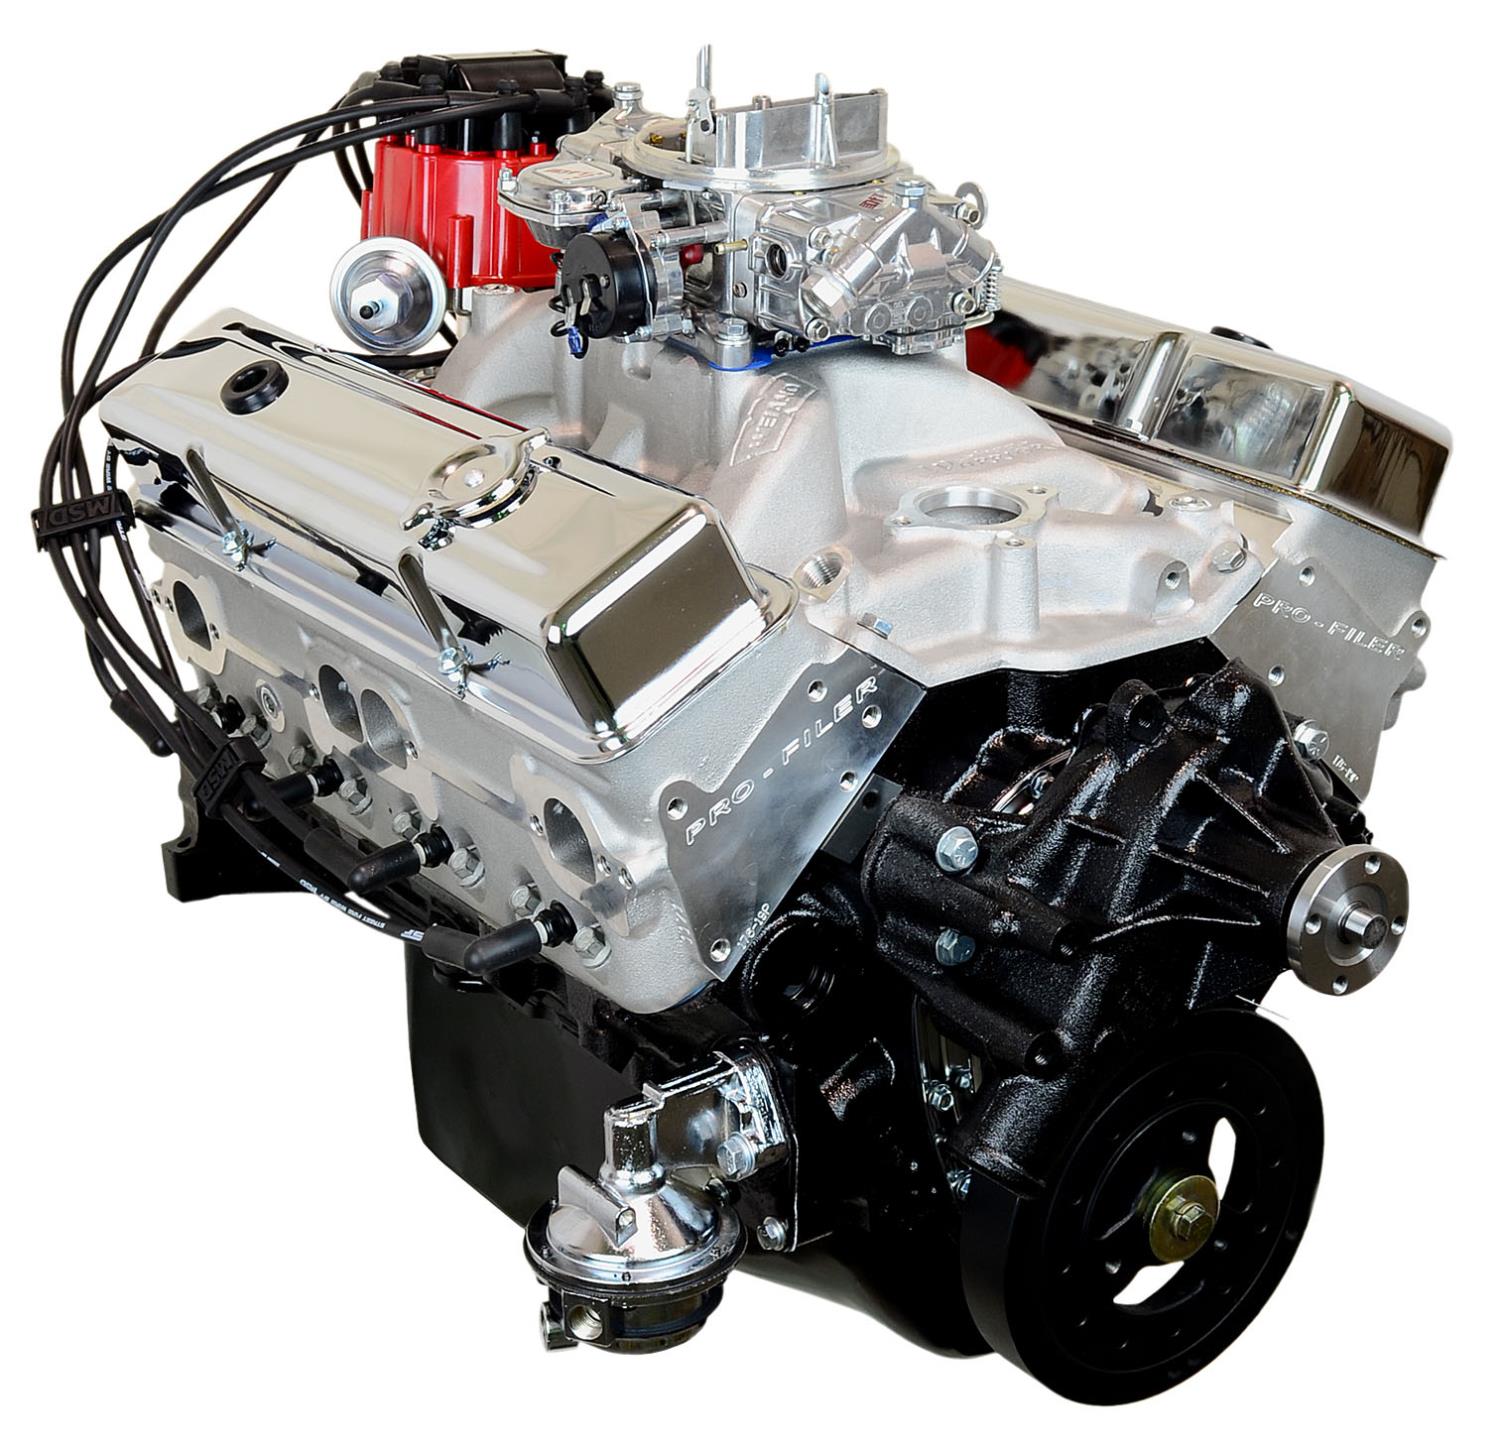 HP94C High Performance Crate Engine Small Block Chevy 383ci / 420HP / 465TQ